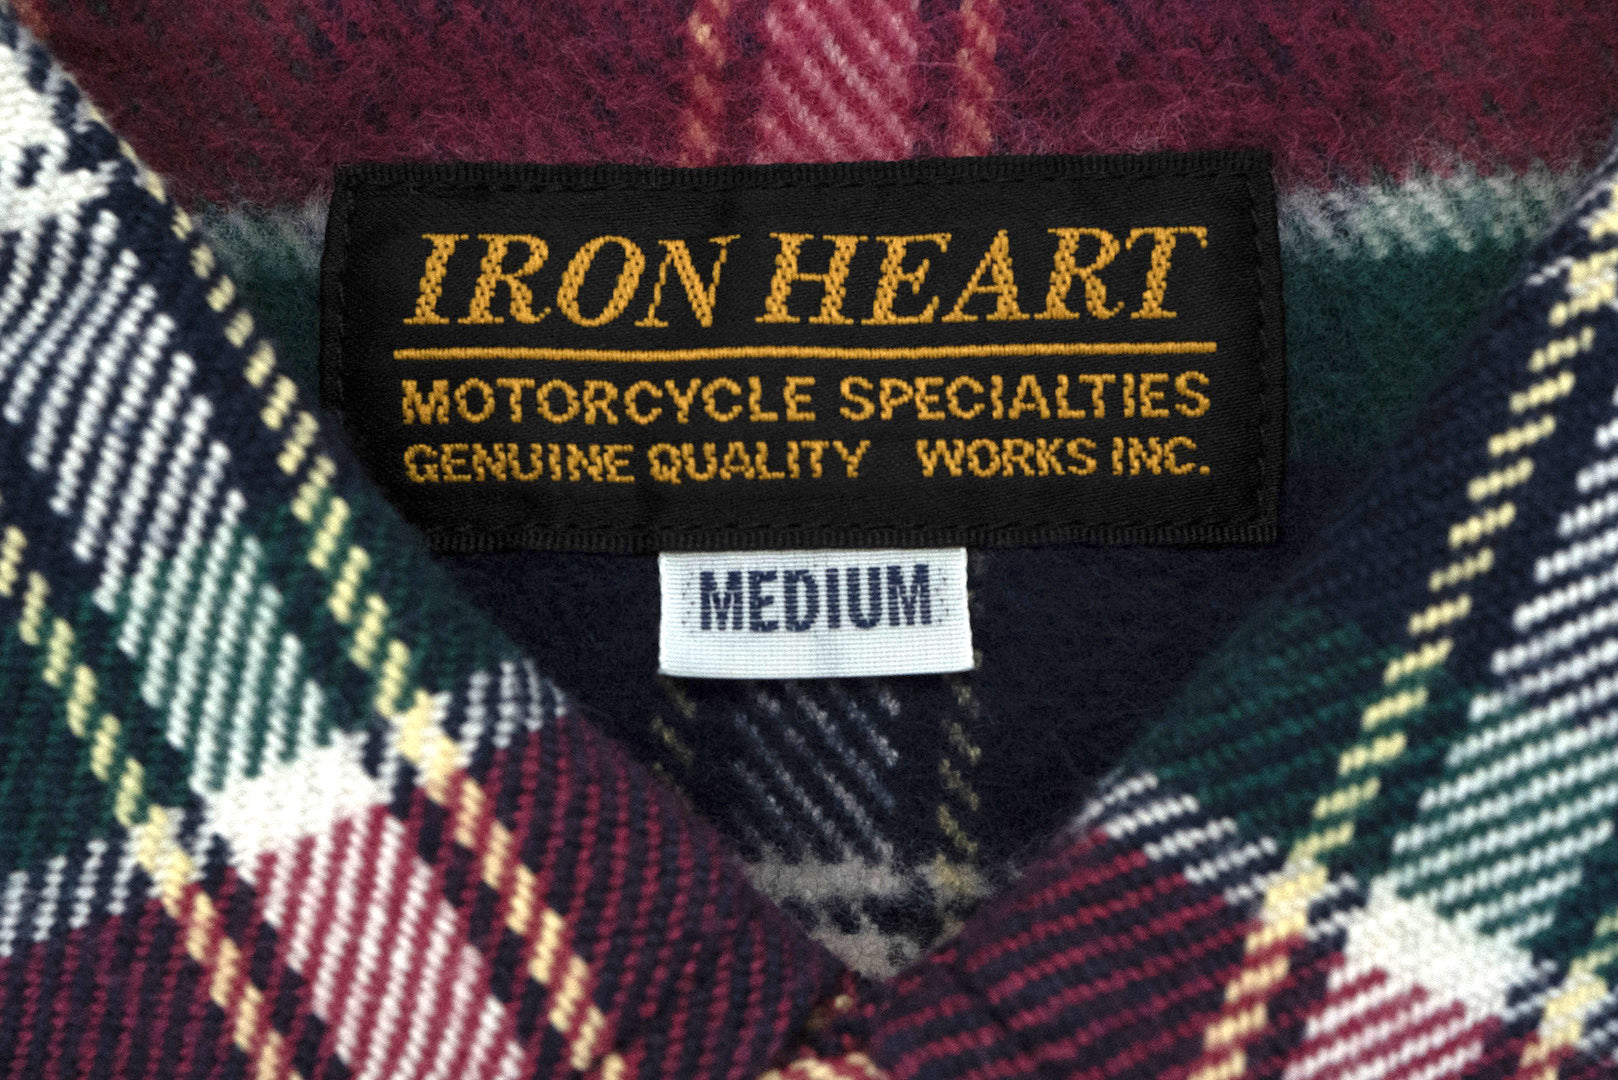 Iron Heart Ultra-Heavy Flannel Crazy Check Western Shirt (Santa Red x Green)